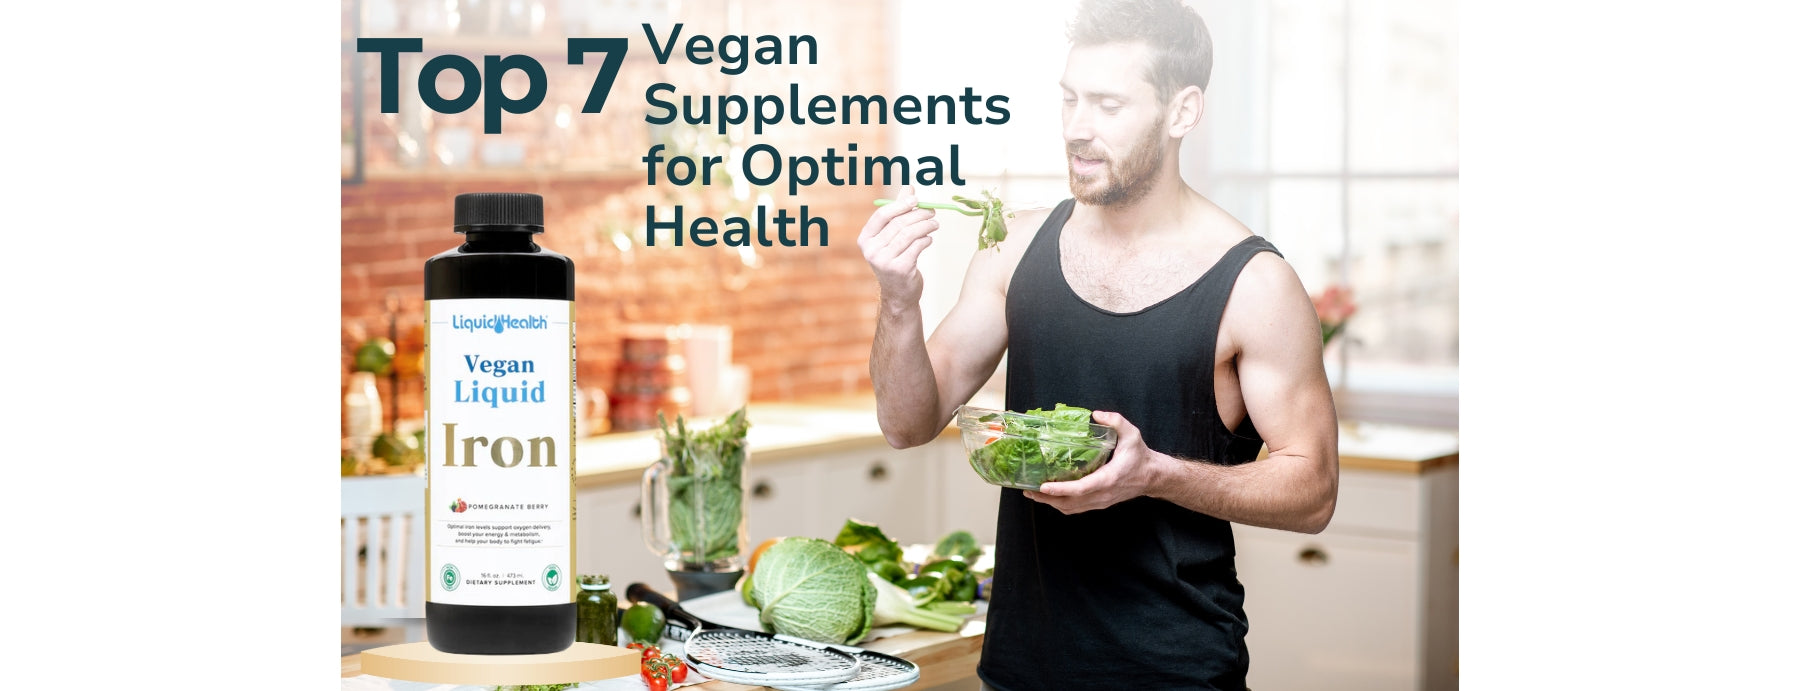 Top 7 Vegan Supplements for Optimal Health